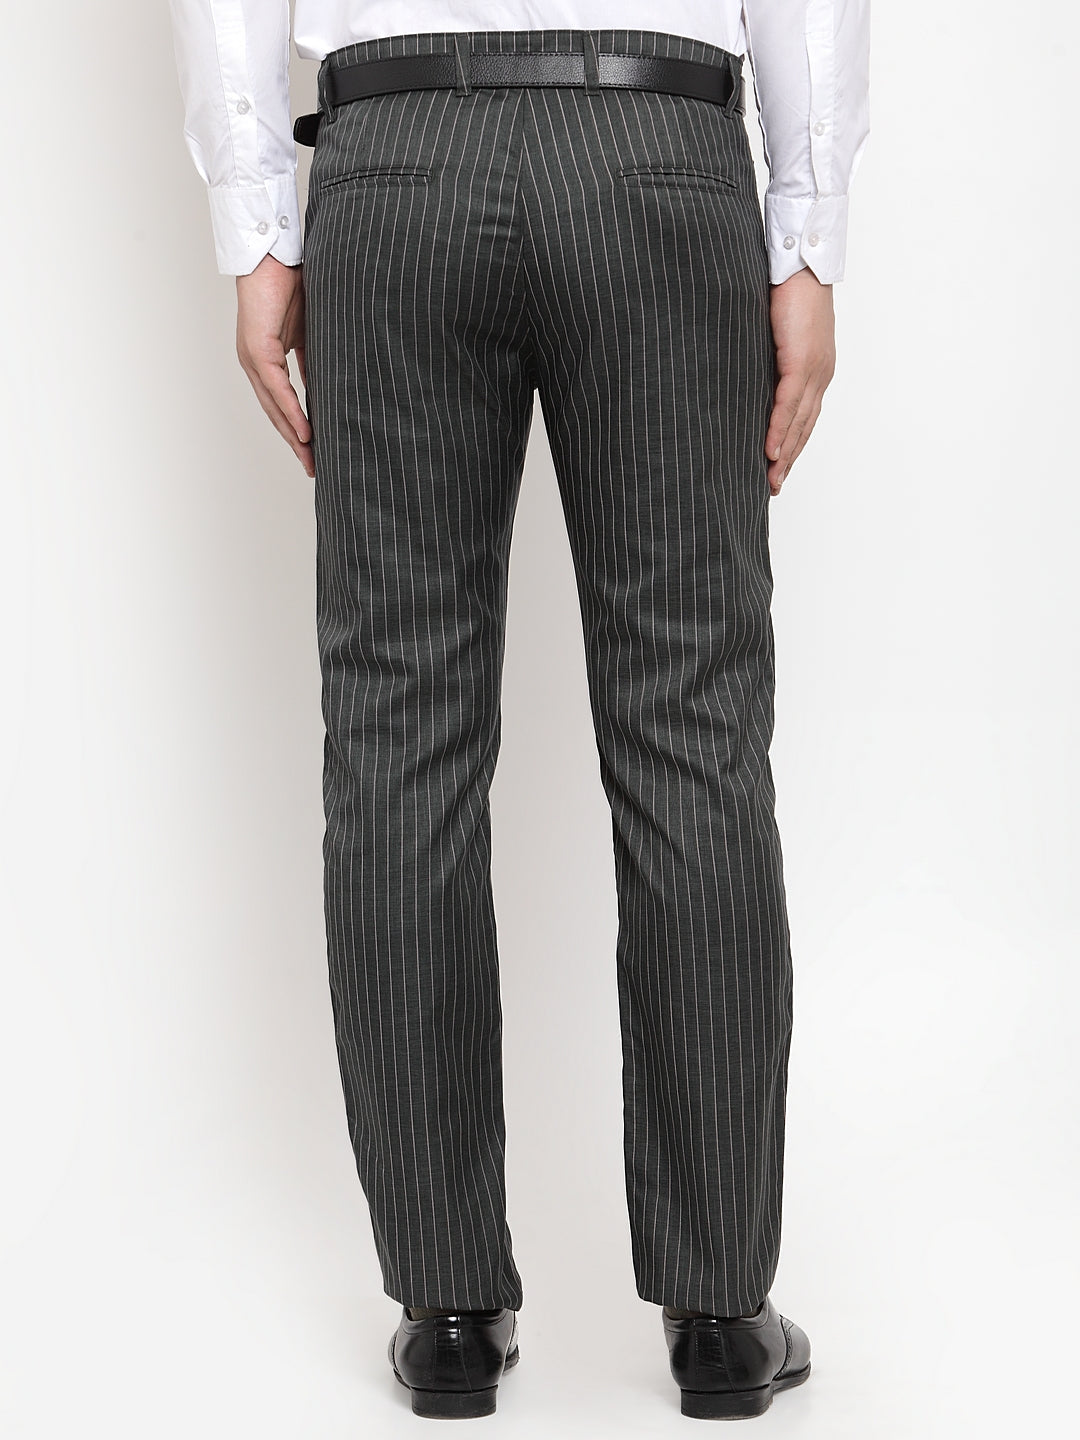 Men's Green Cotton Striped Formal Trousers ( FGP 255Olive ) - Jainish